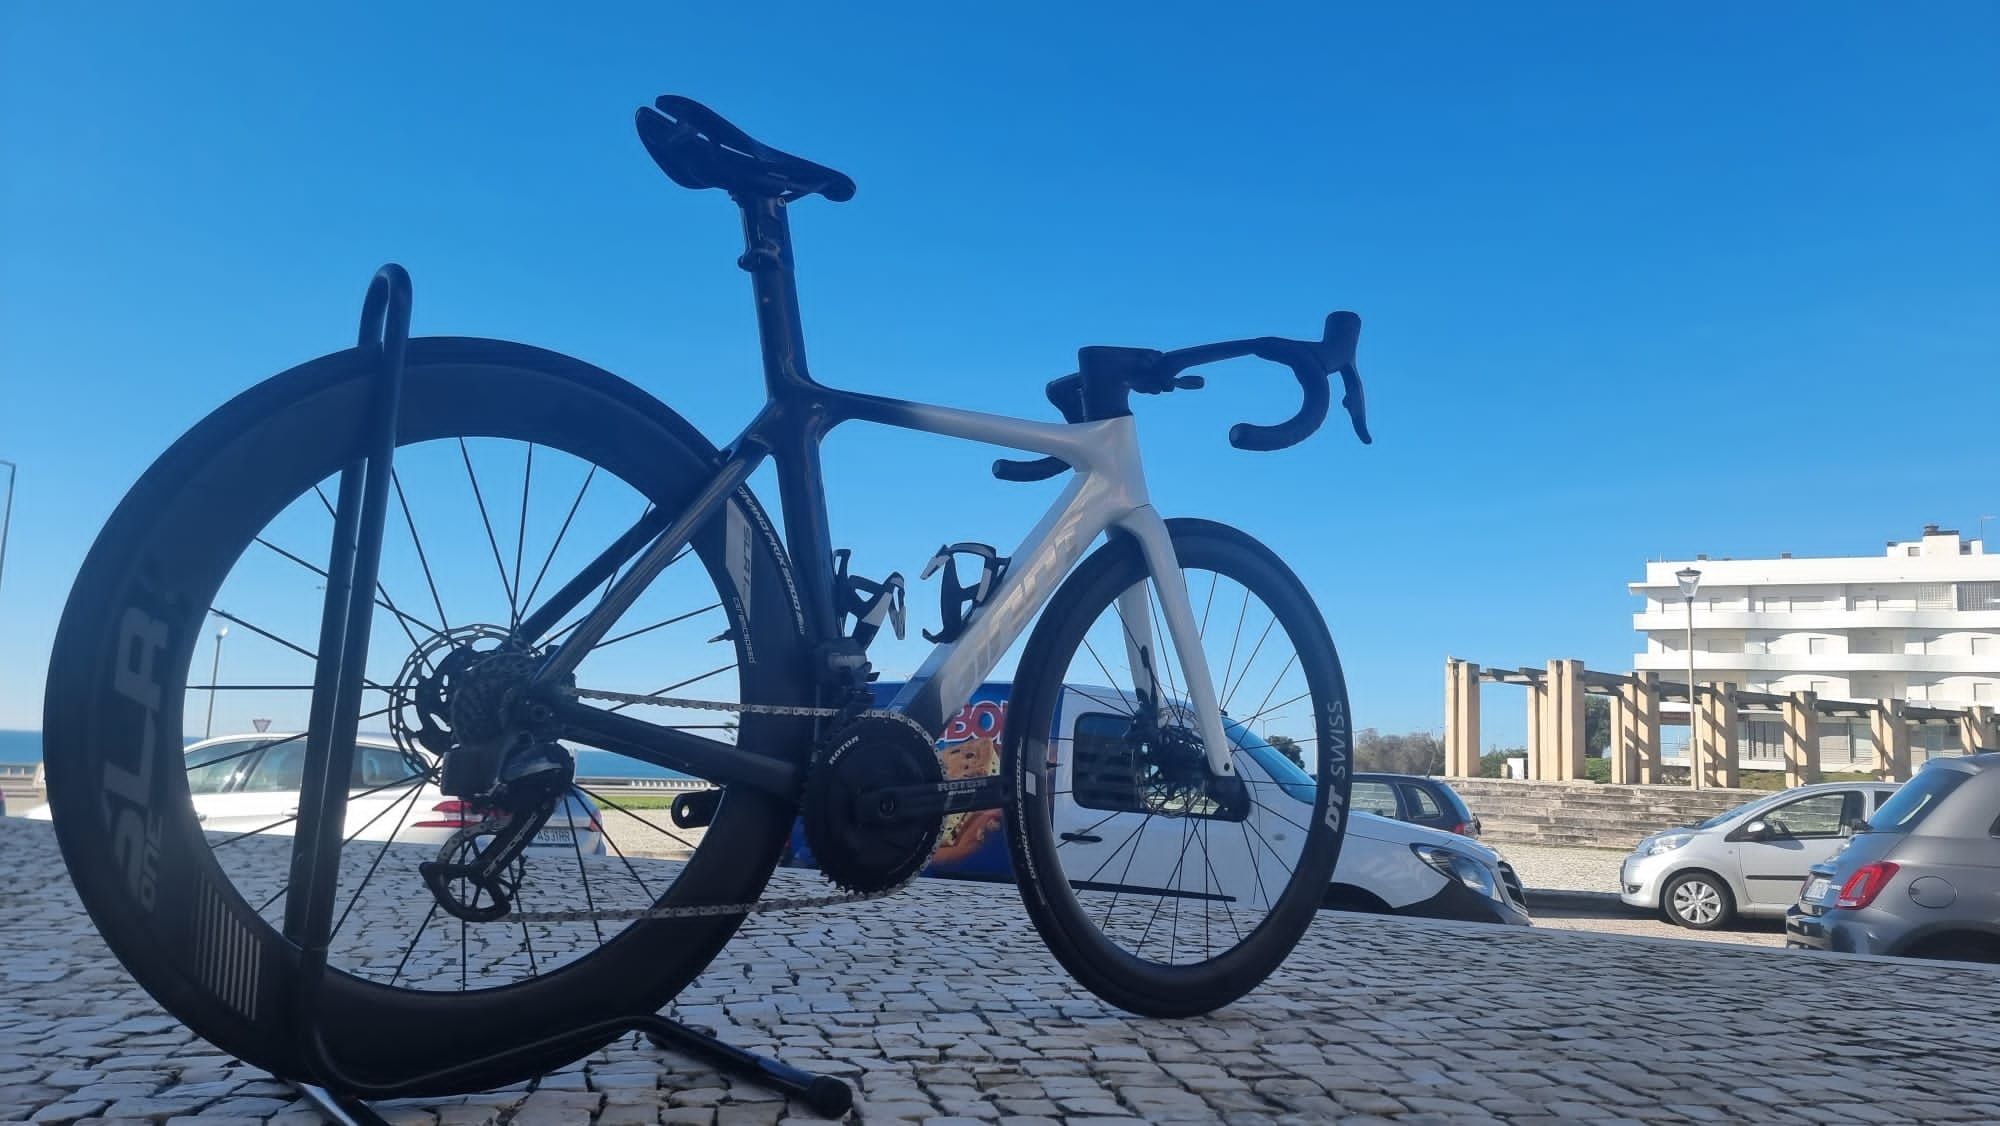 Bicicleta Giant Propel advanced SL 1 disc Sram force 2020